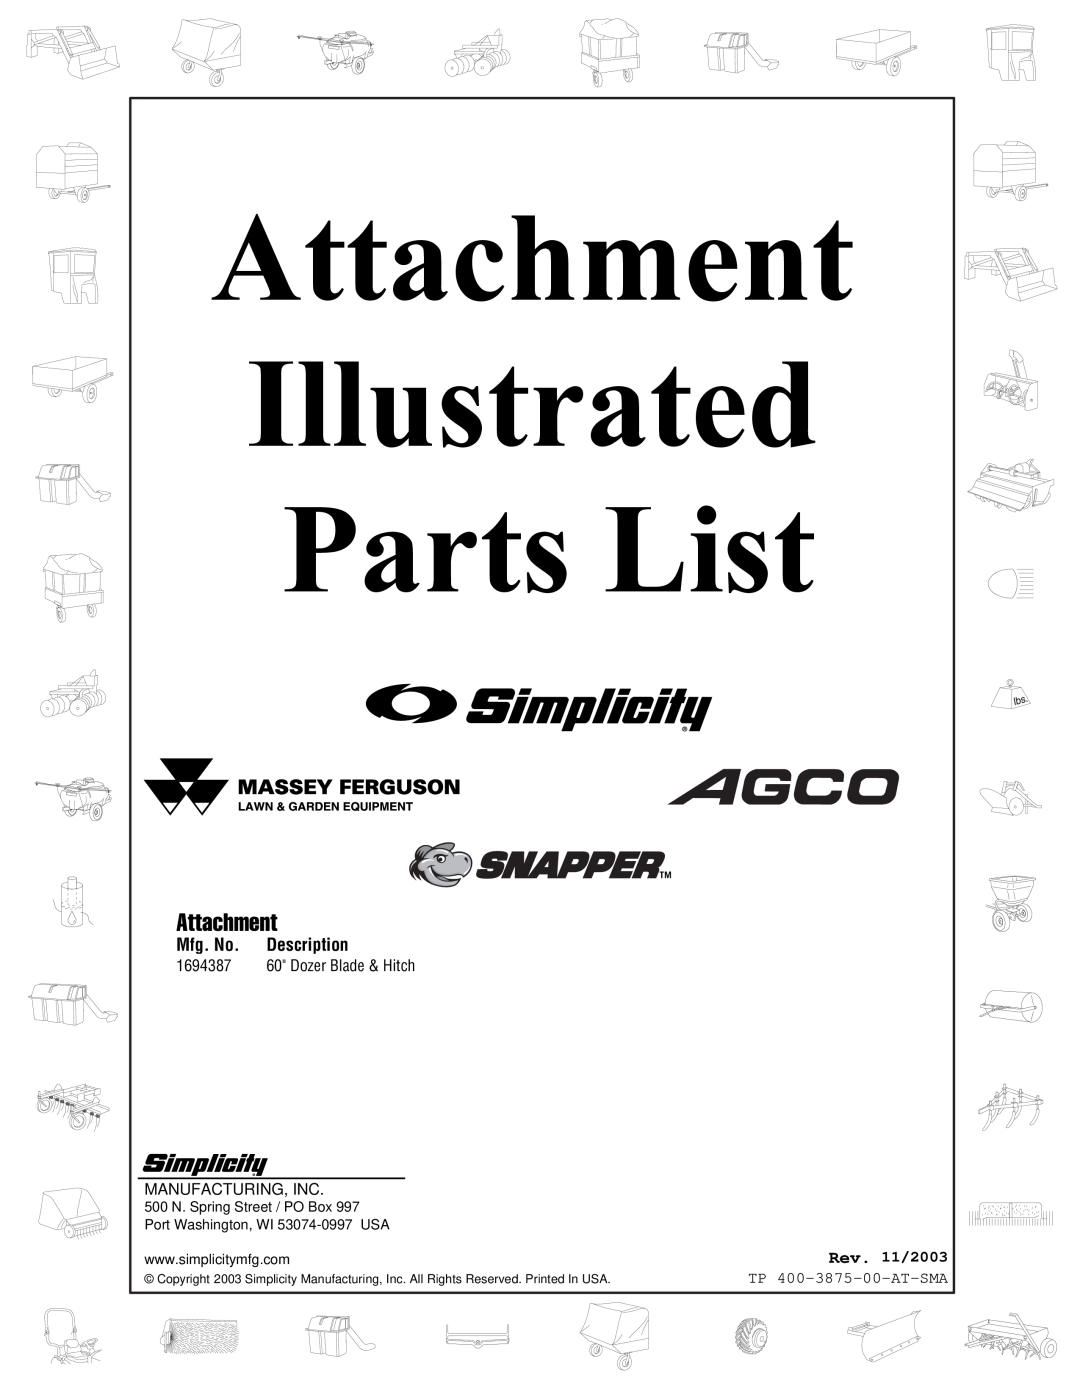 Snapper 4542 manual Mfg. No. Description, TP 400-3875-00-AT-SMA, Attachment Illustrated Parts List, Rev. 11/2003 